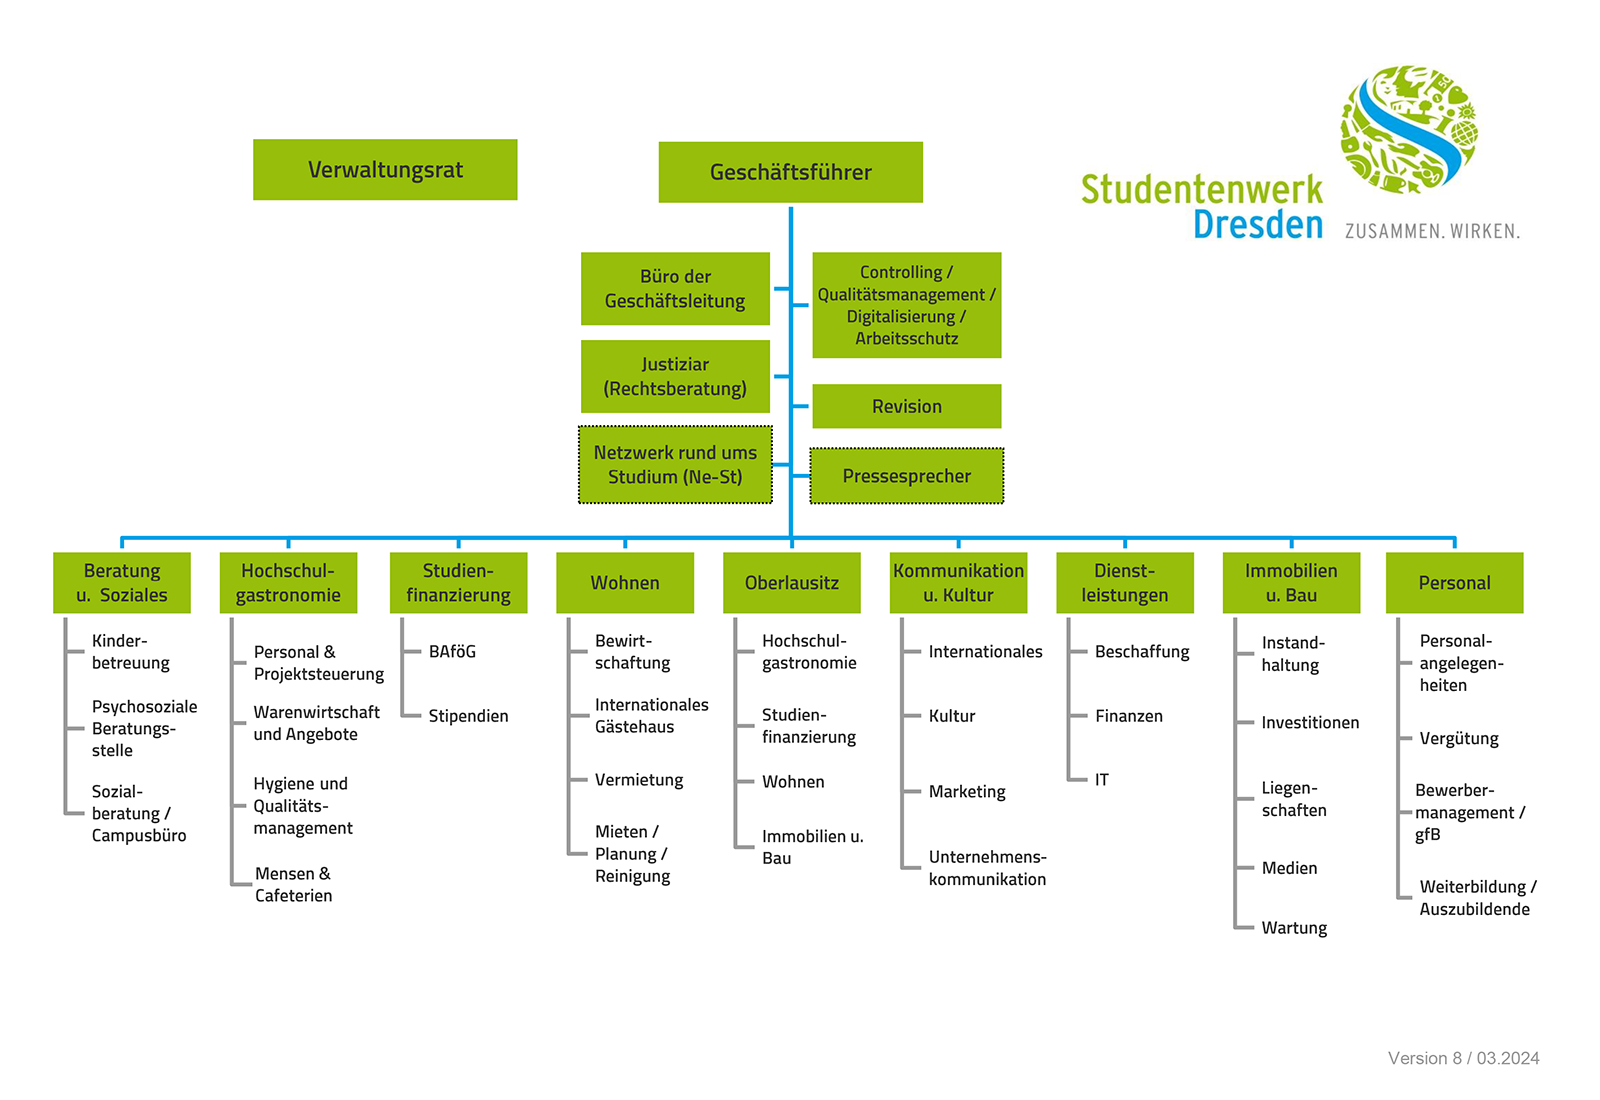 Studentenwerk Dresden organization chart